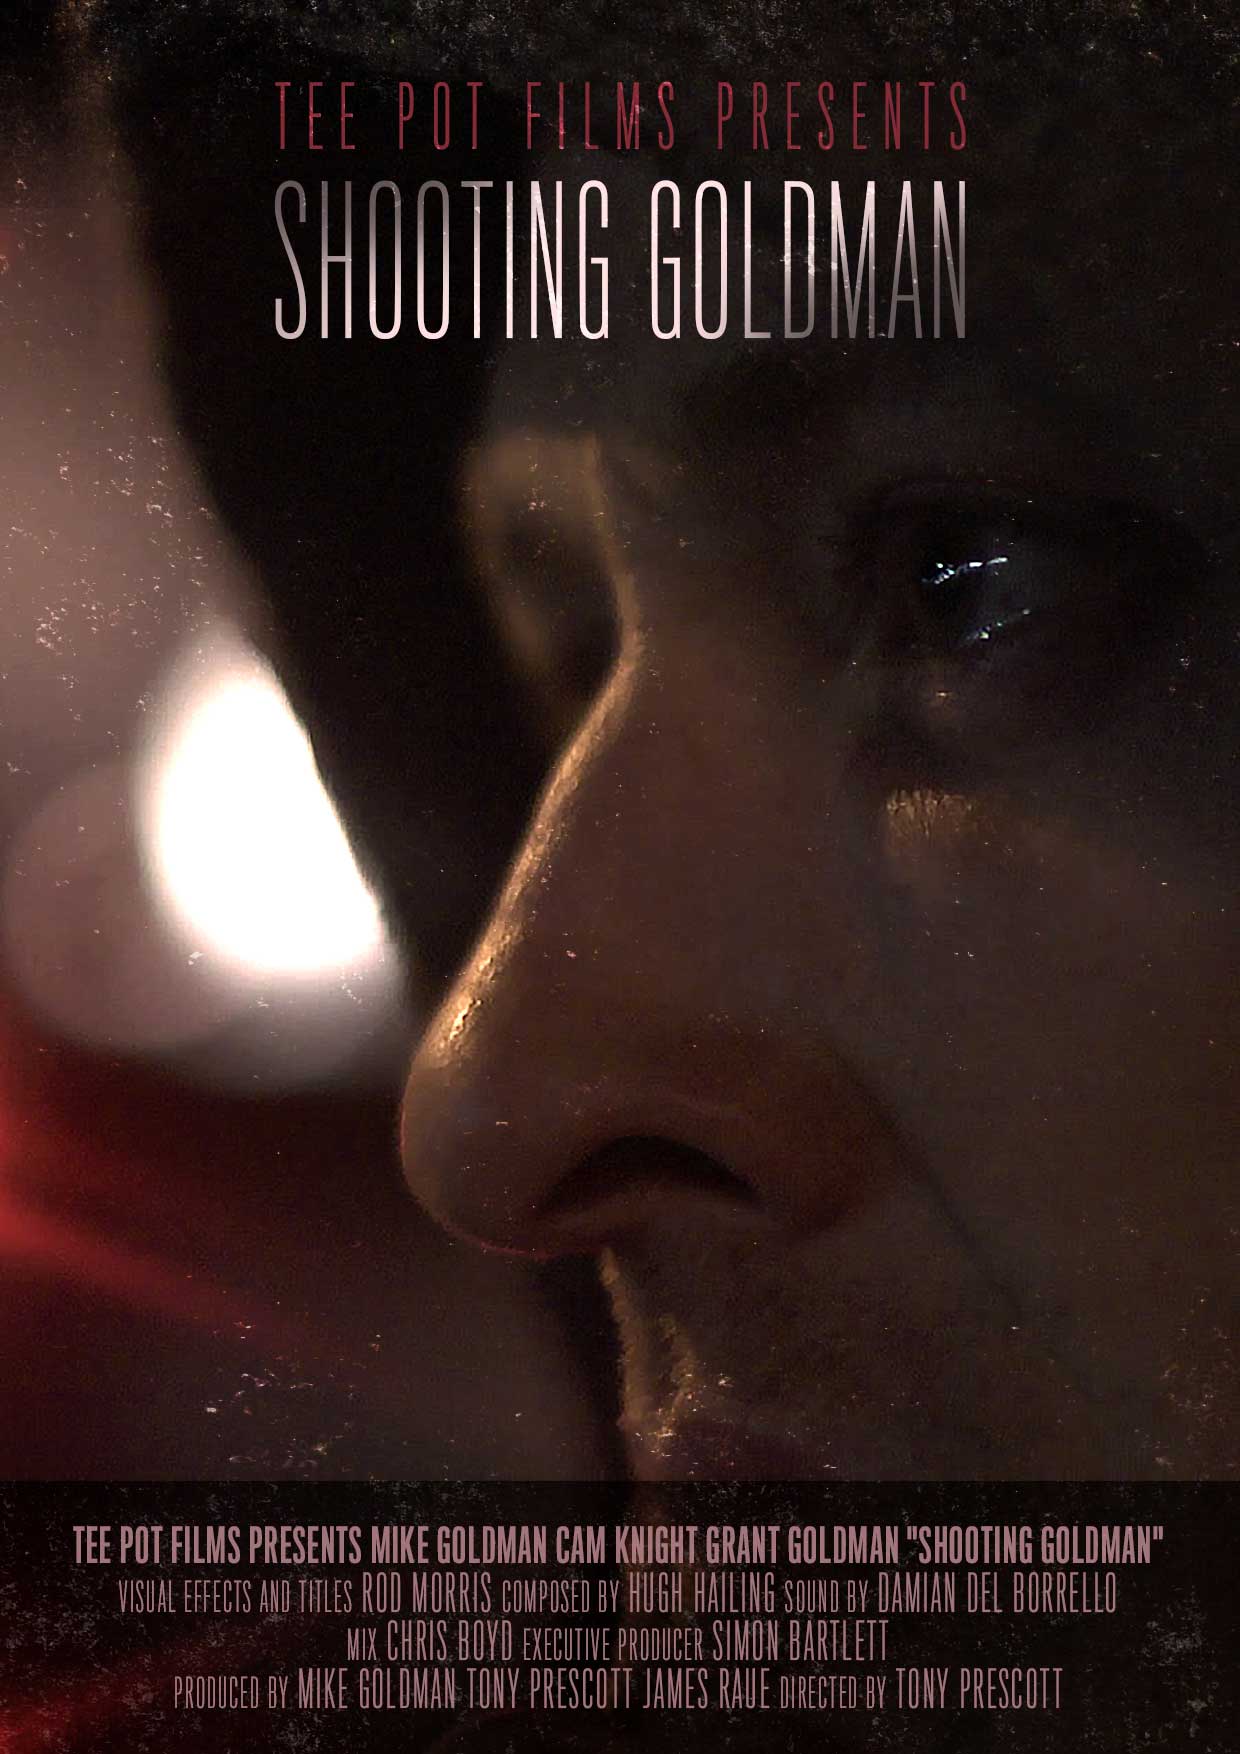 Shooting Goldman